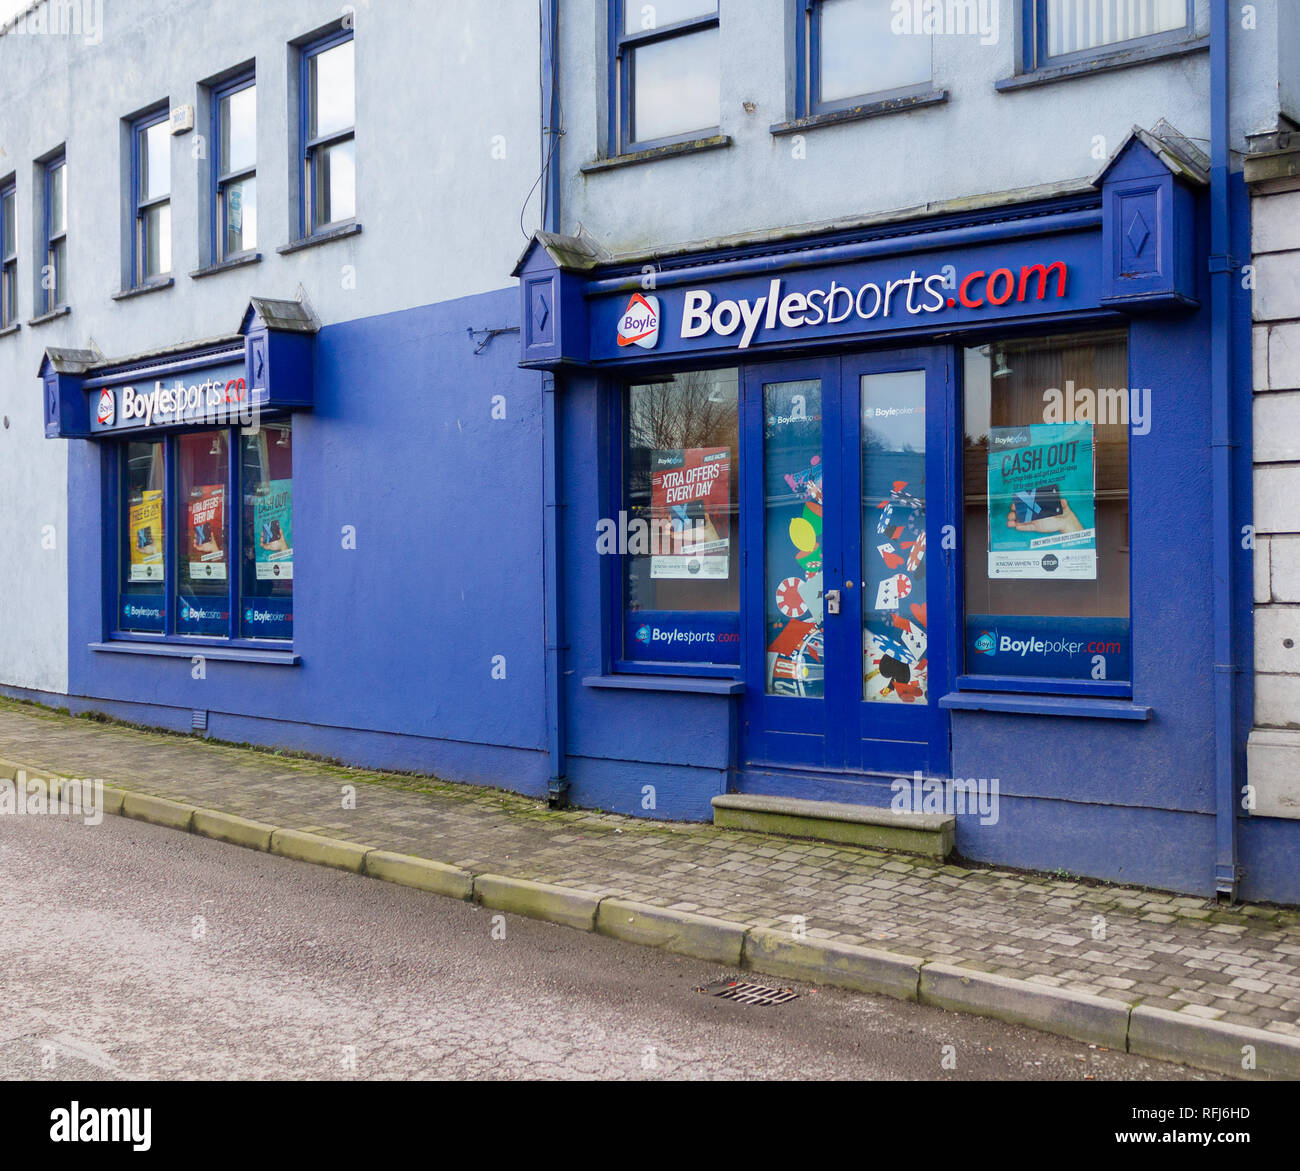 Boylesports.com betting shop front on bandon high street west cork ireland Stock Photo